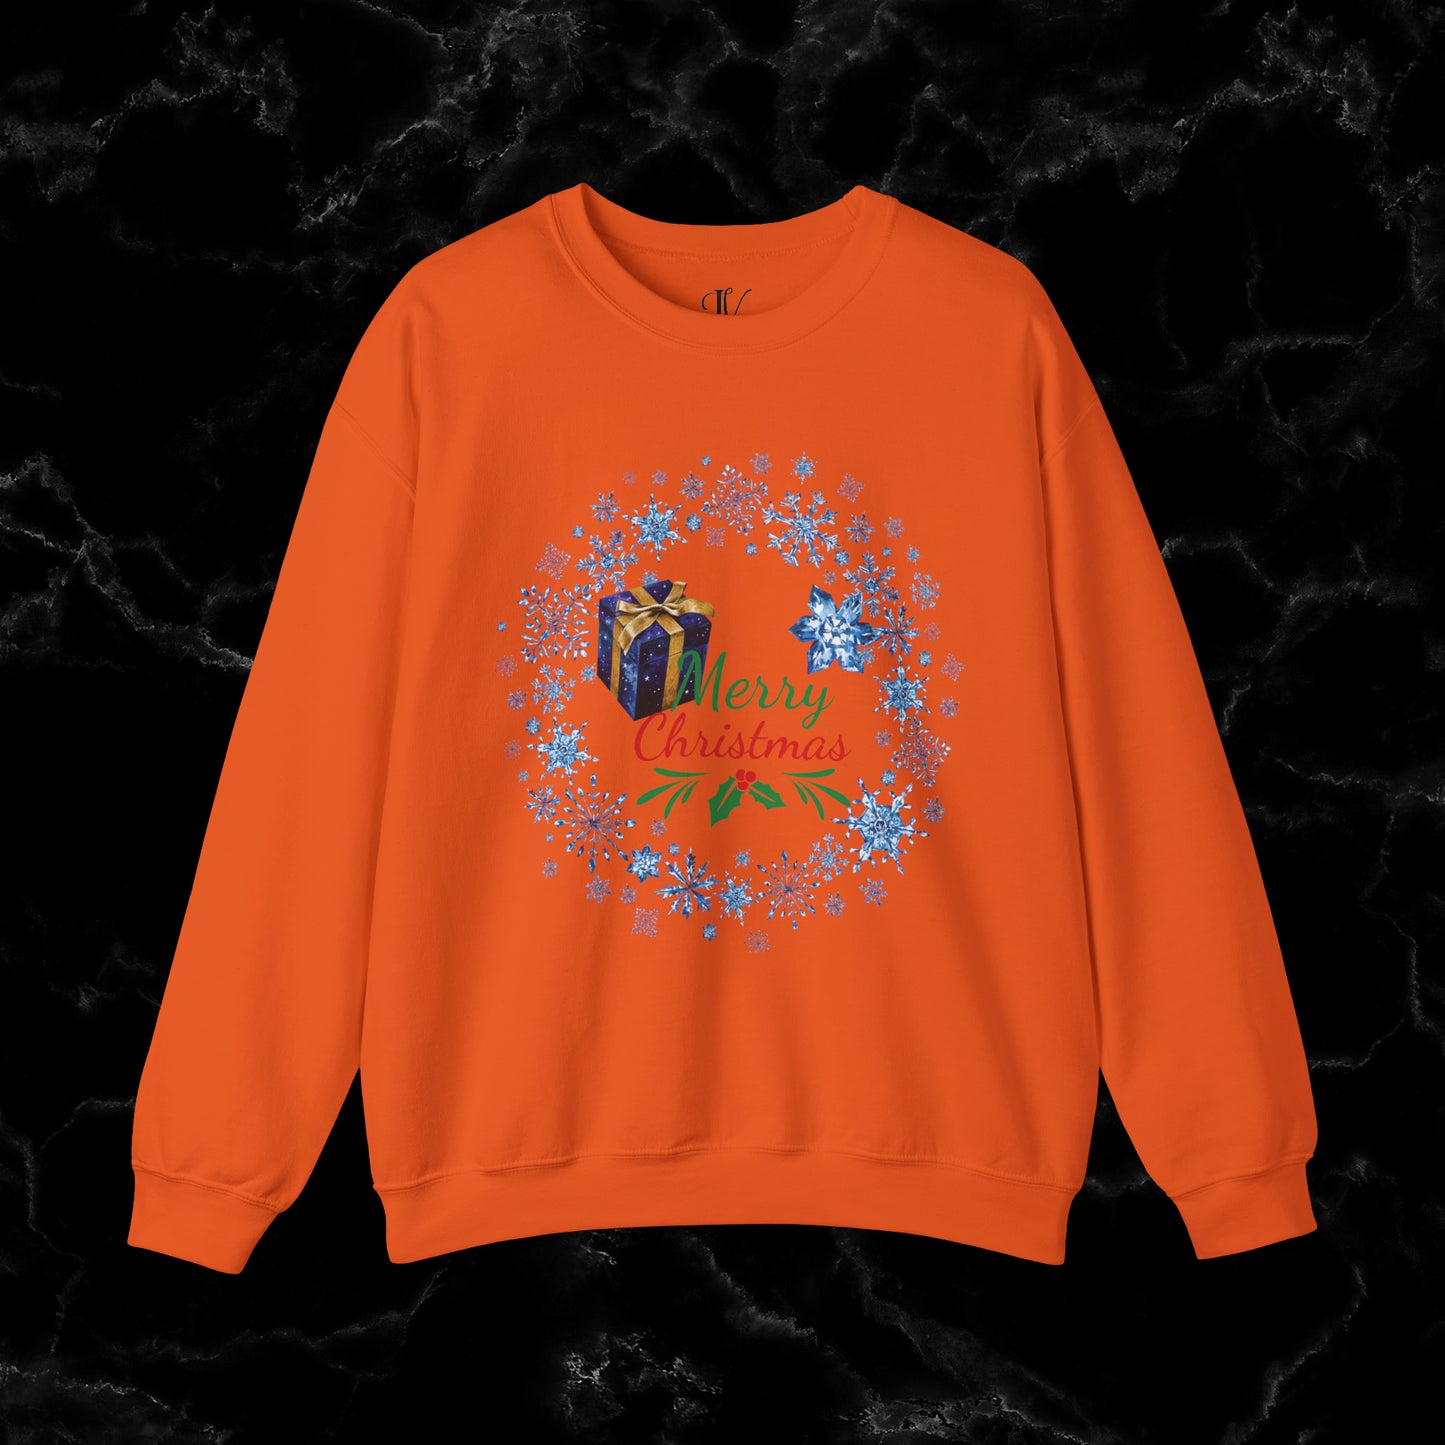 Merry Christmas Sweatshirt - Matching Christmas Shirt, Wreath Design, Holiday Gift Sweatshirt S Orange 